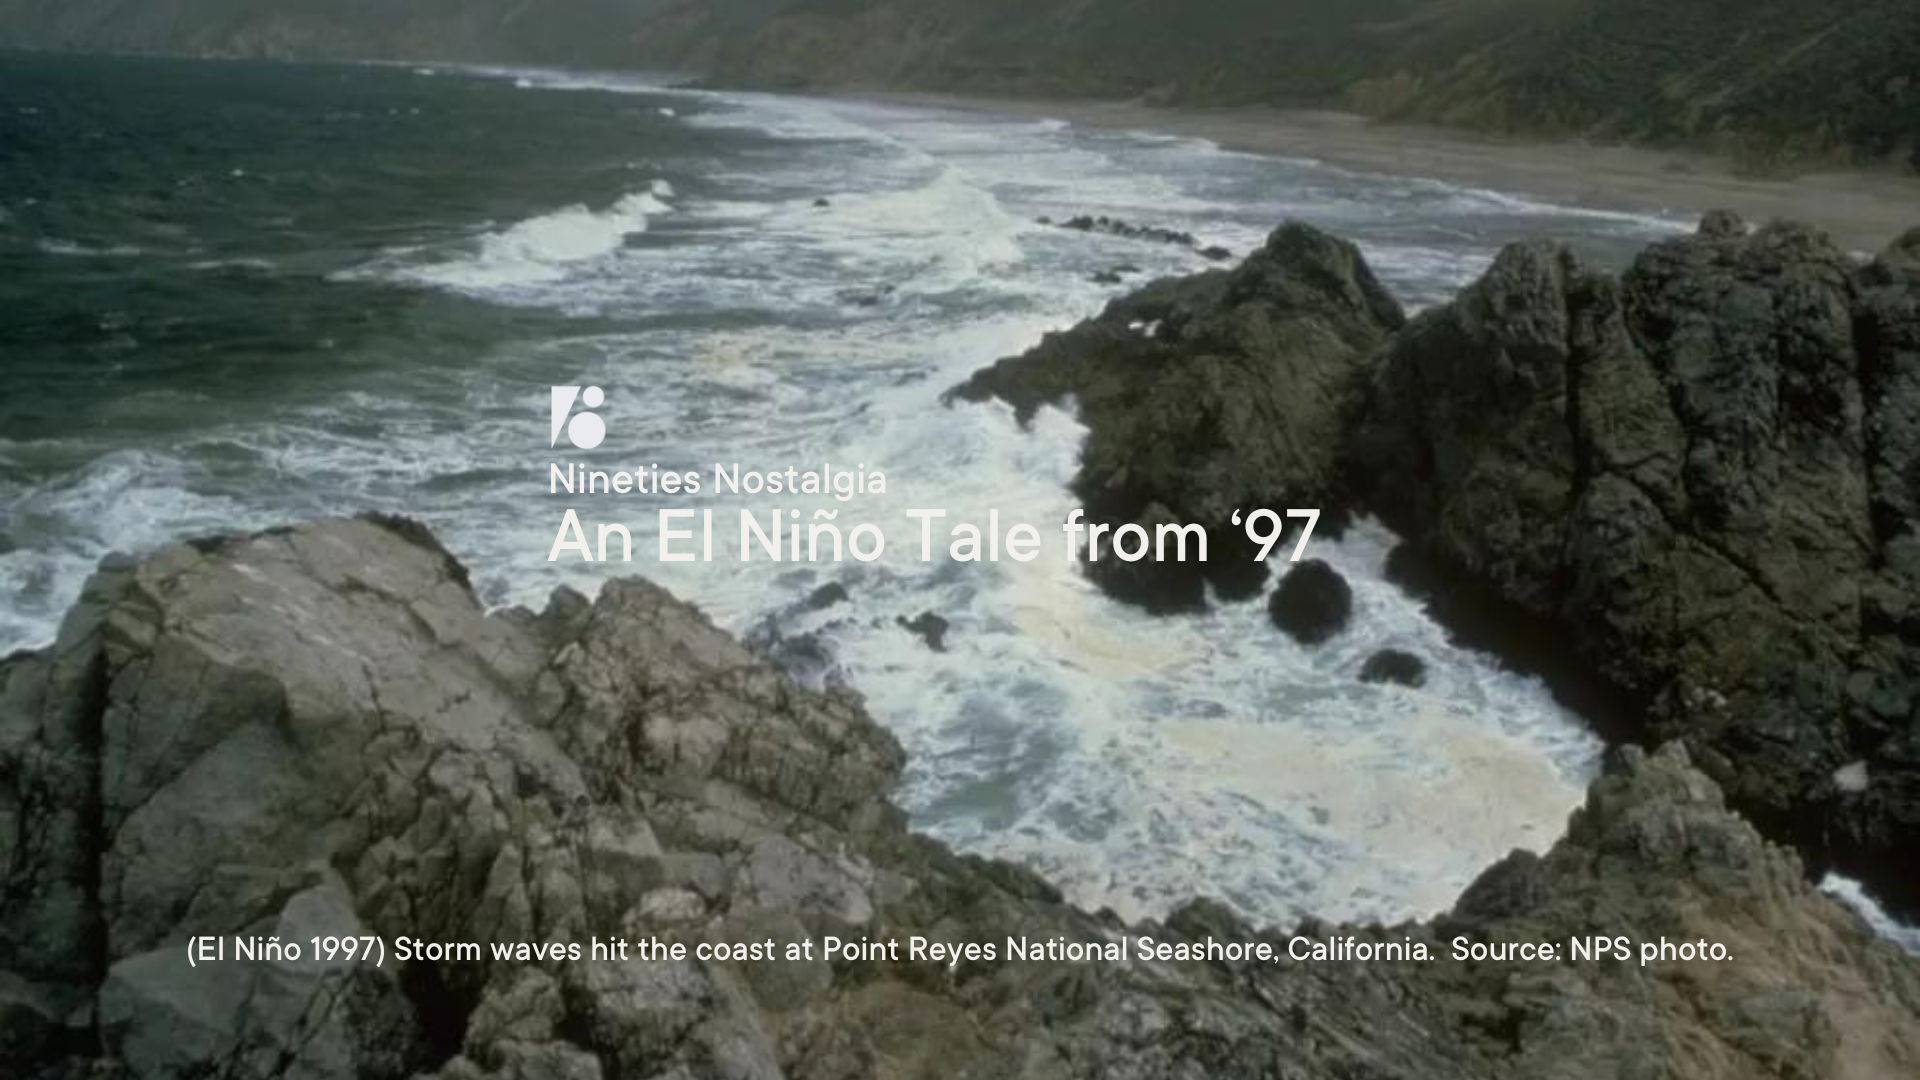 Nineties Nostalgia: An El Niño Tale from '97